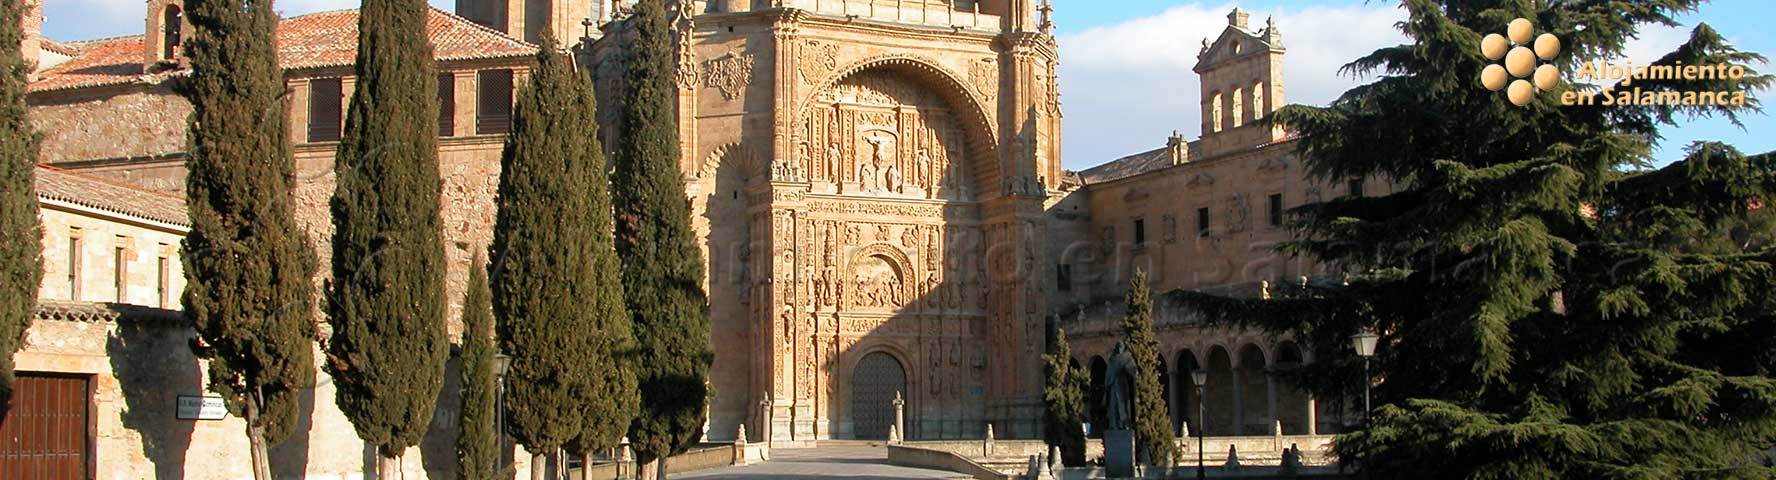 Convento de San Esteban. Padres Dominicos. Salamanca.